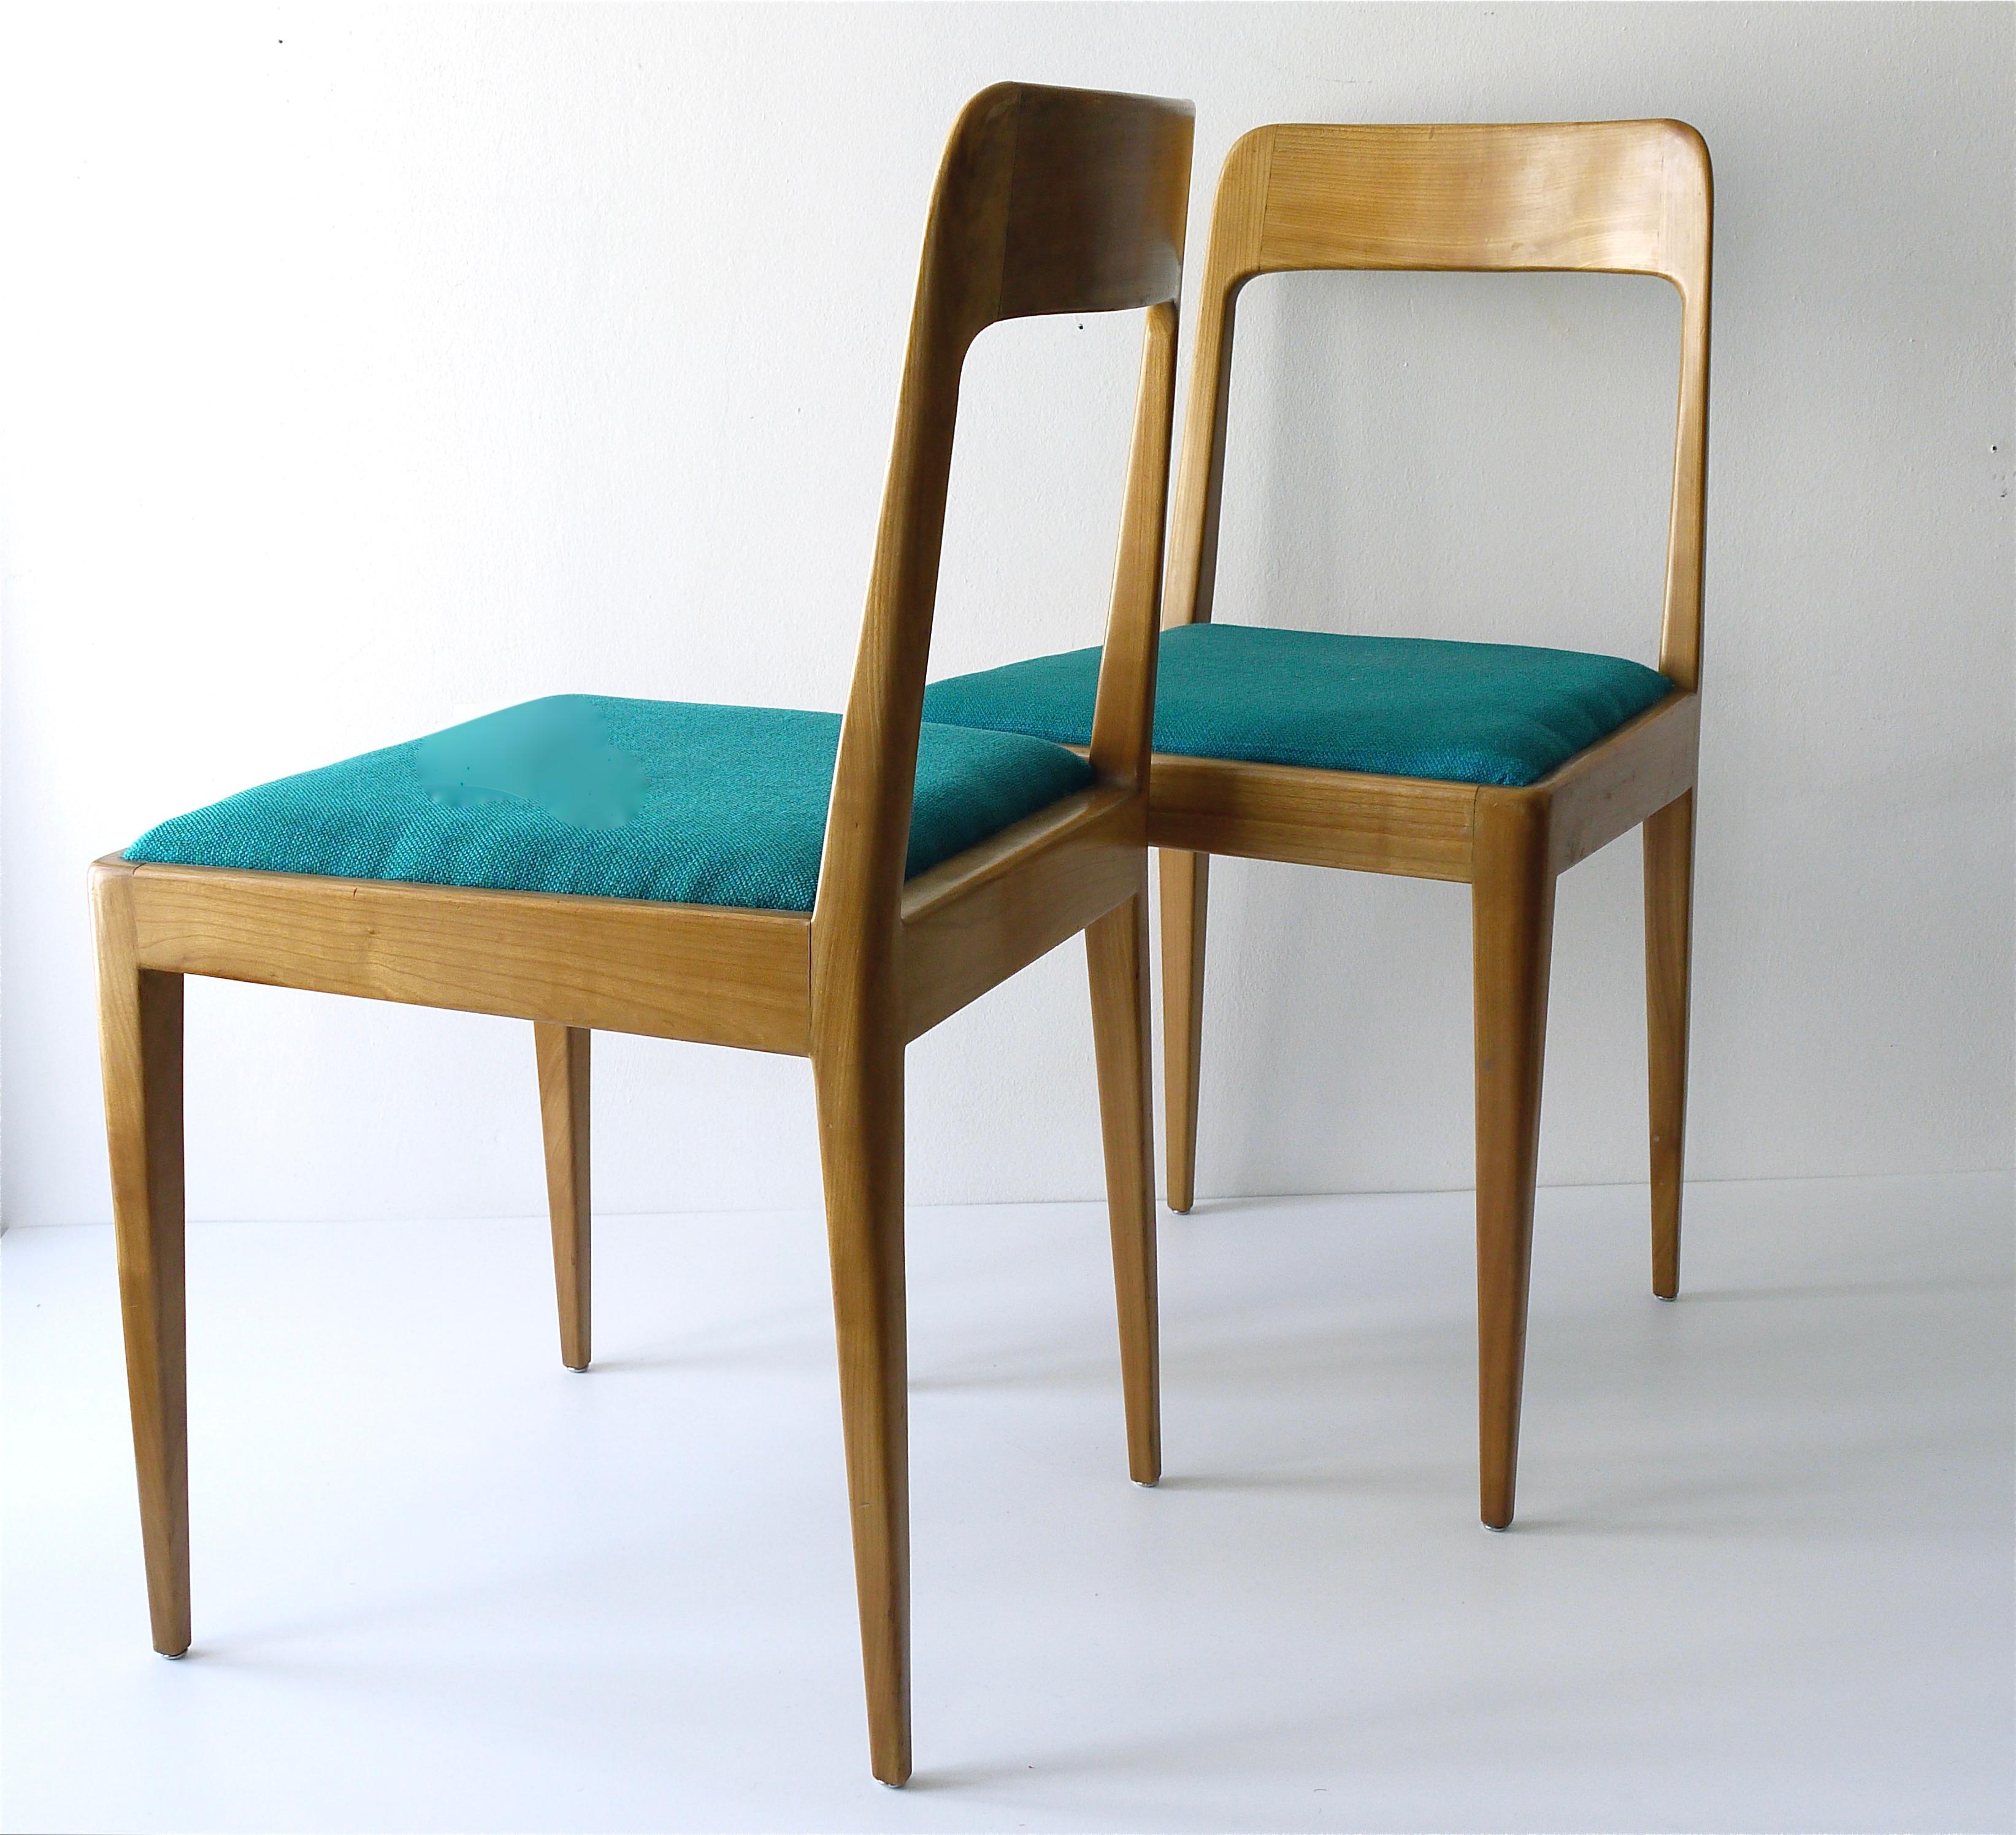 Four Carl Aubock Midcentury Walnut Chairs A7, Vienna, Austria, 1950s For Sale 9